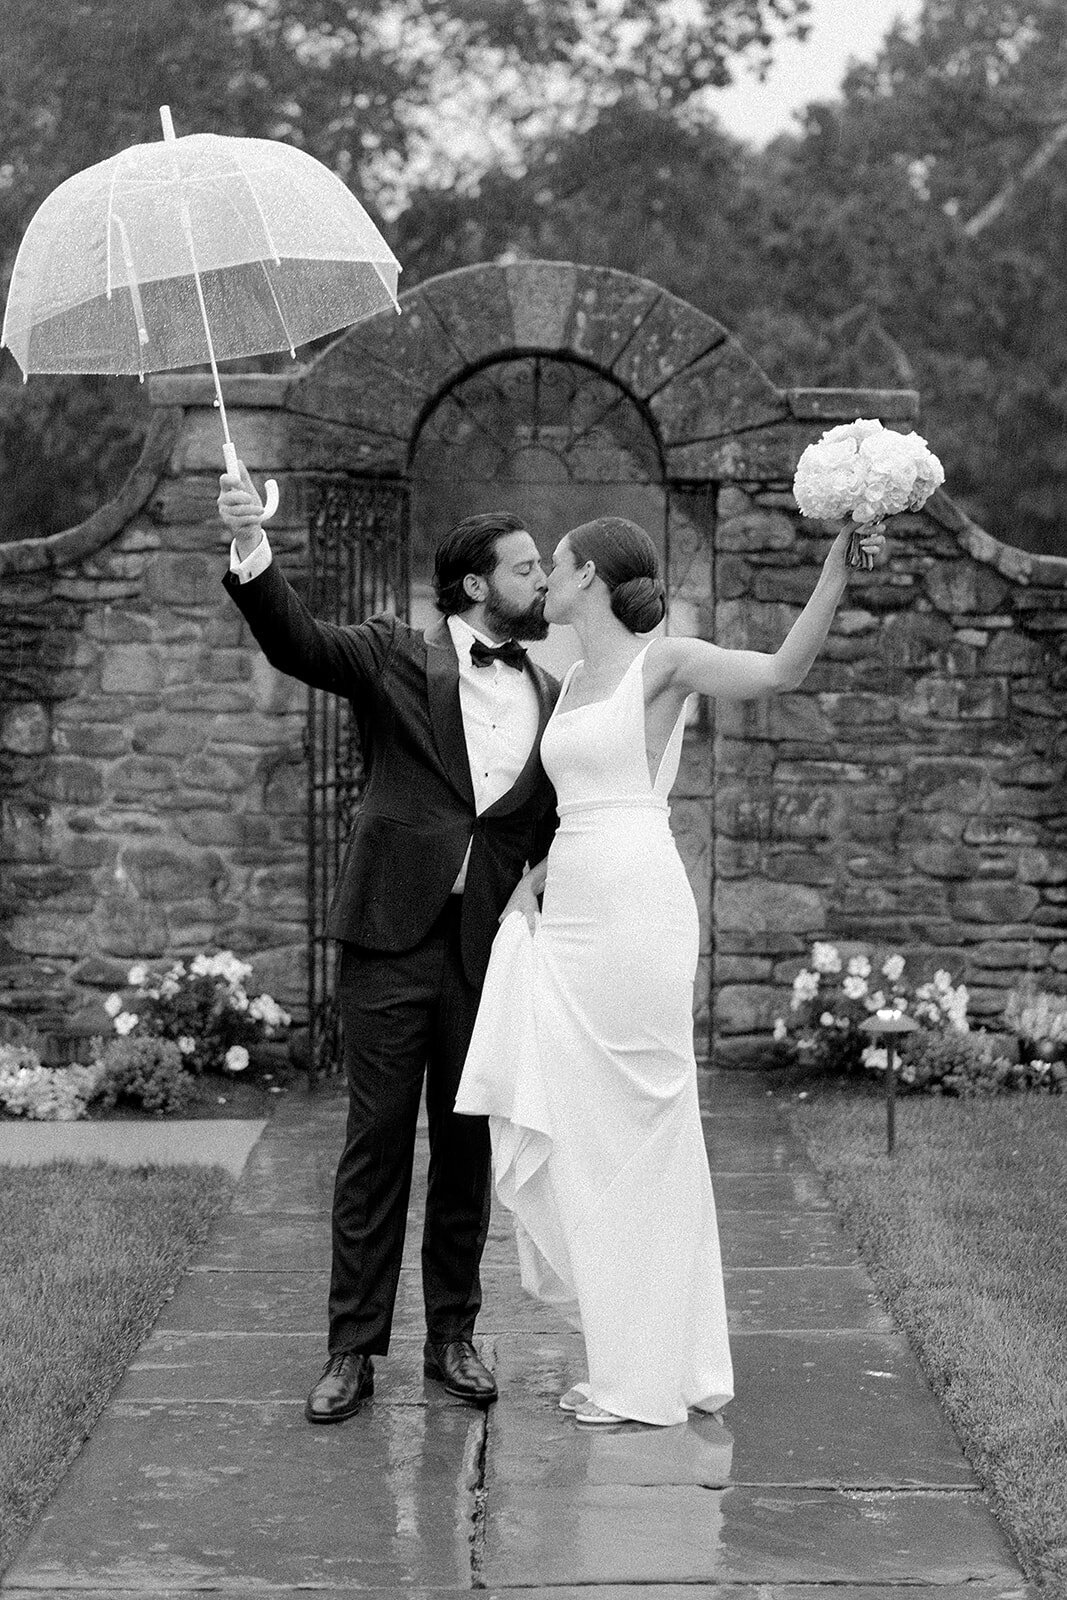 Kate-Murtaugh-Events-RI-wedding-planner-elopement-micro-wedding-intimate-celebration-Shepherds-Run-rain-umbrella-bride-groom-portrait